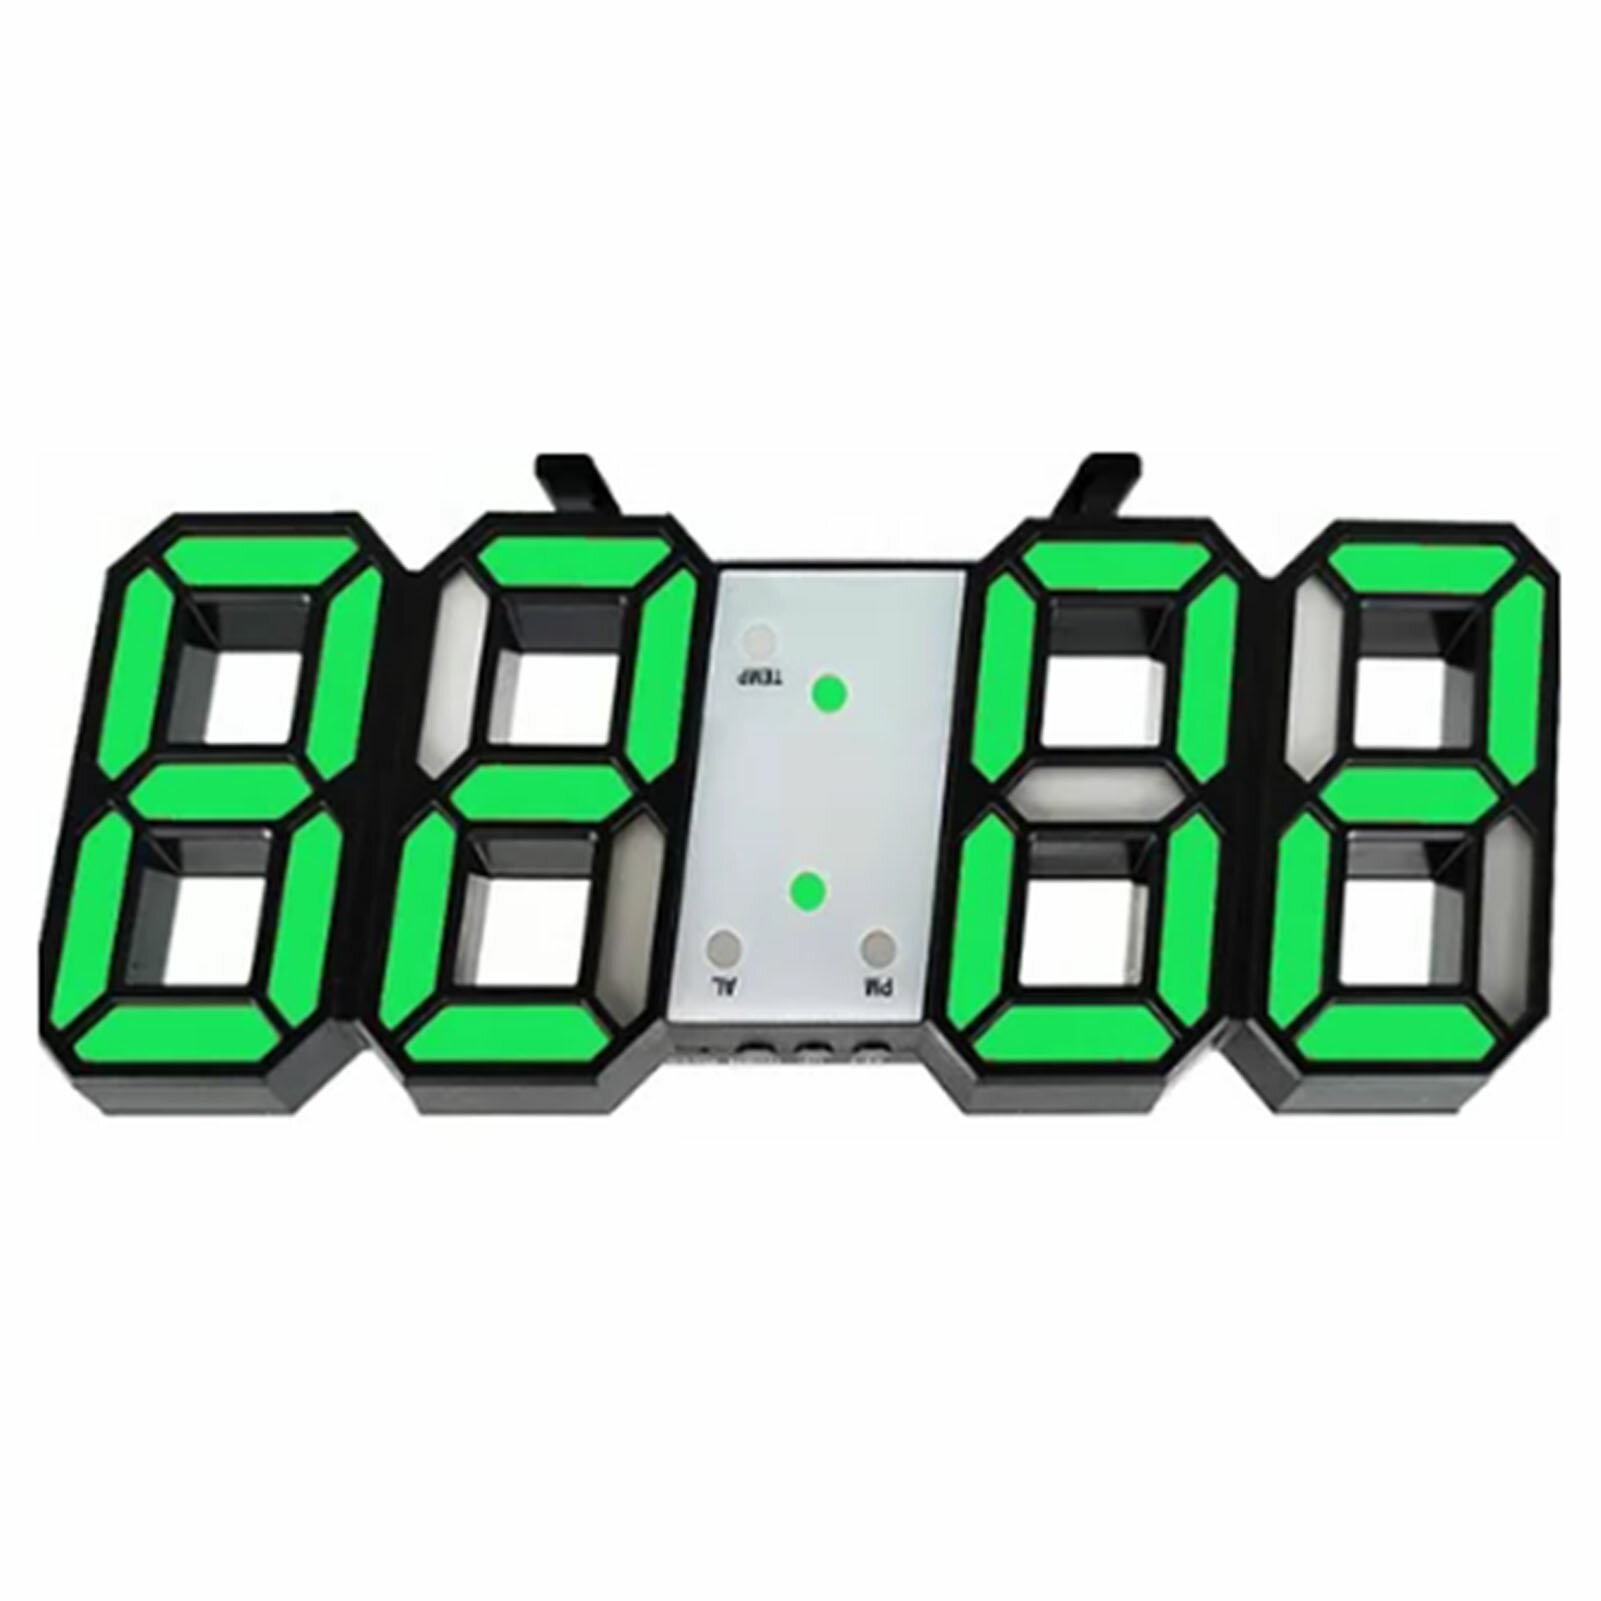 3D 時計 USB 充電 2 電源多機能プラスチック USB 3D (黒枠緑文字) 3